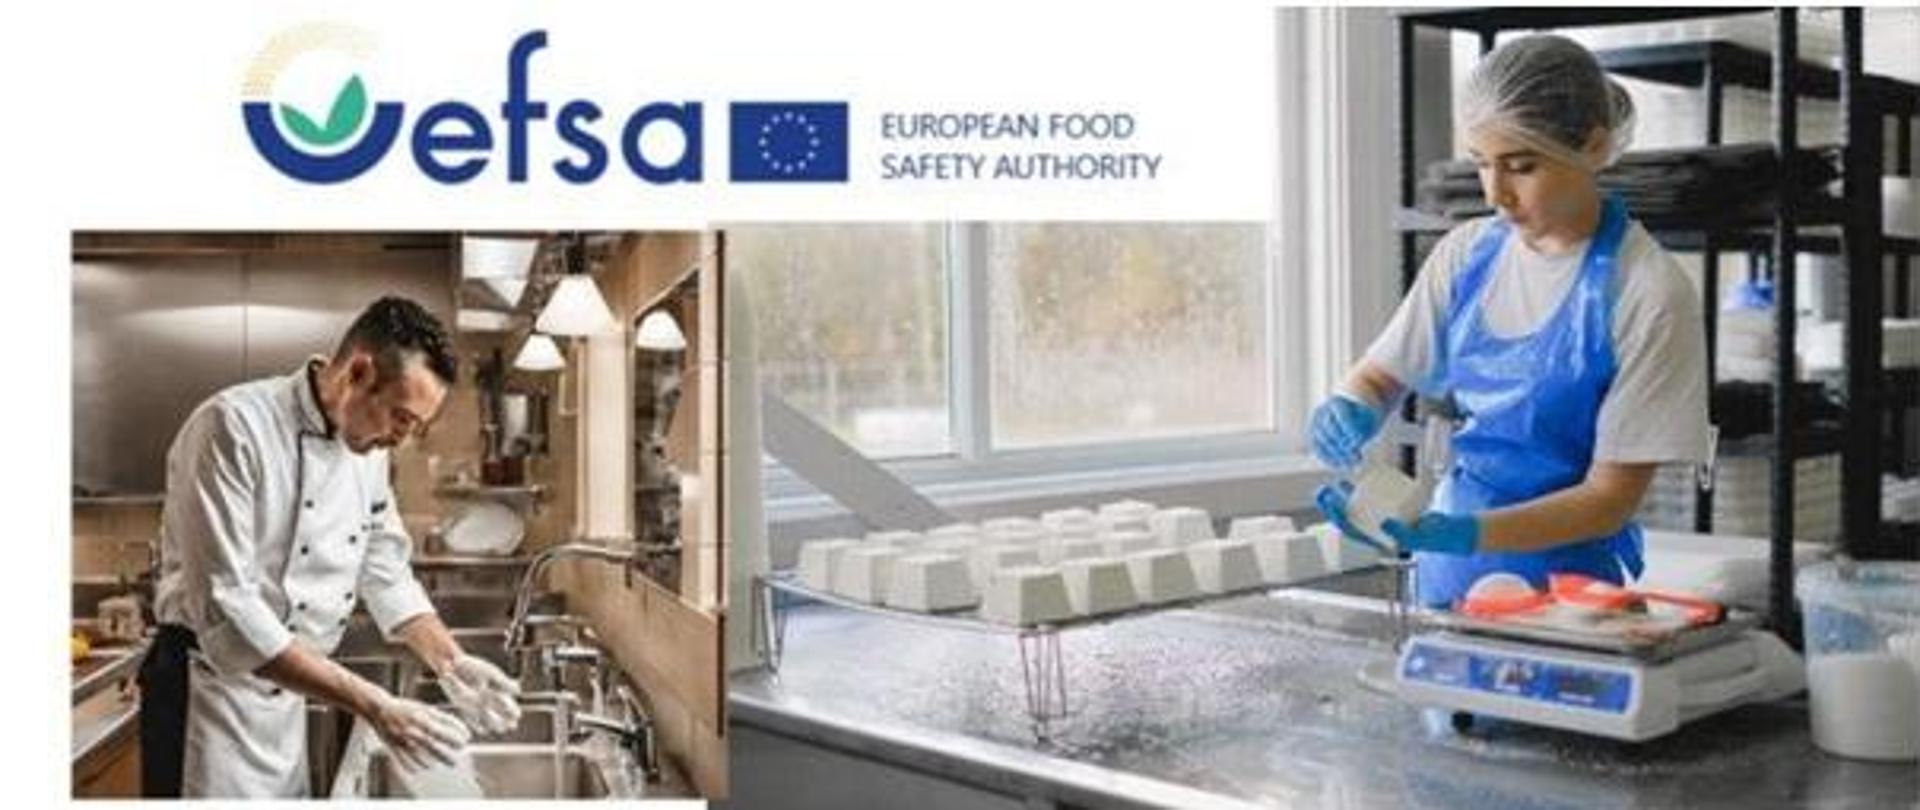 EFSA European Food Safety Authority